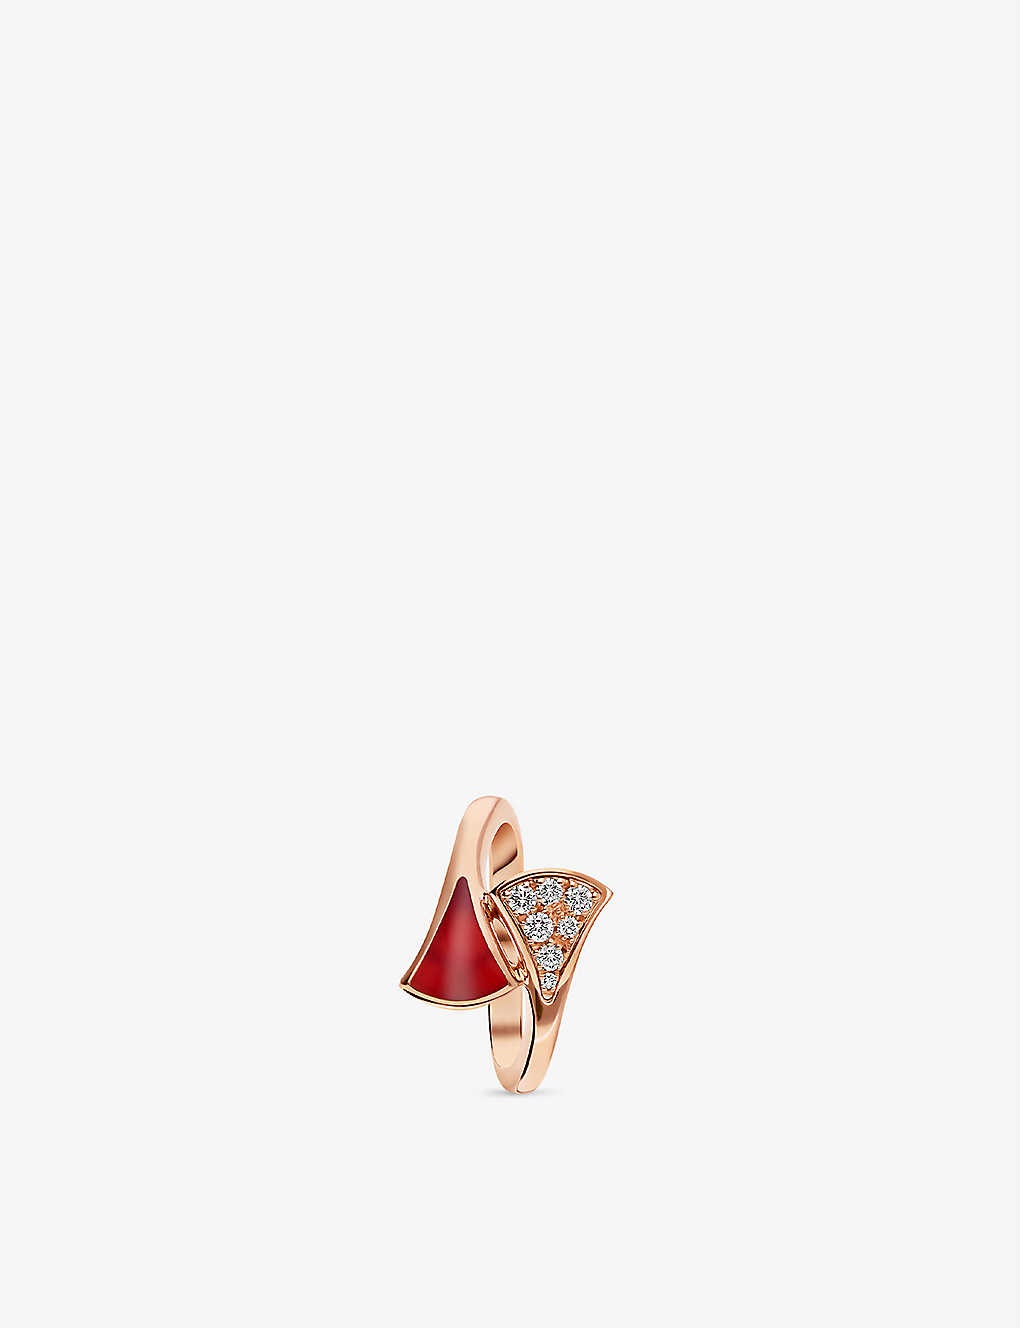 Diva's Dream 18ct rose-gold, carnelian and 0.08ct brilliant-cut diamond ring - 2